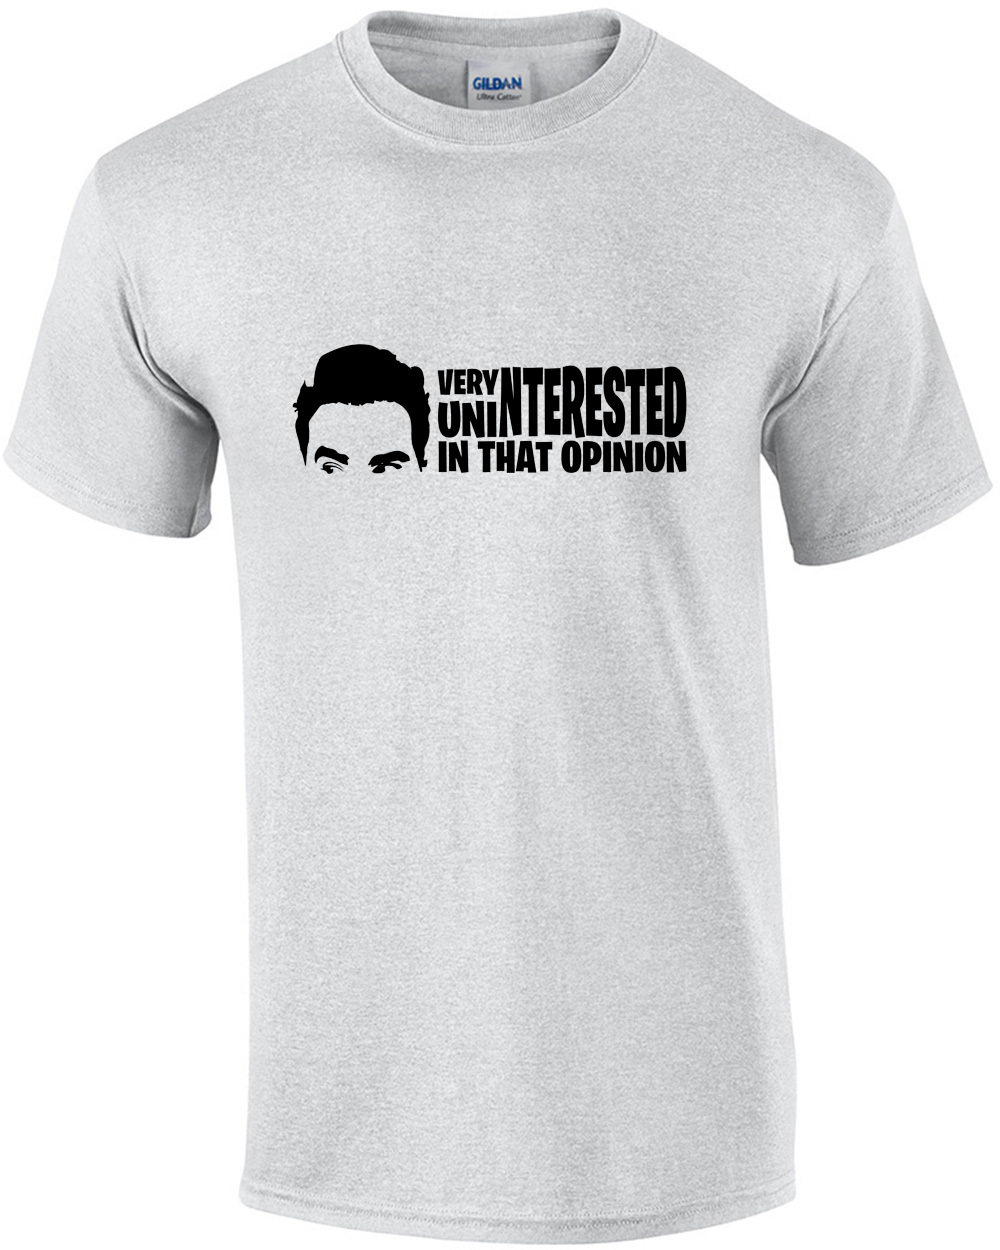 Schitt's Creek Shirt Ew David Shirts. David Rose Shirts Shirts For Men Women Rose Creek Shirt Very Uninterested In That Opinion T-Shirt